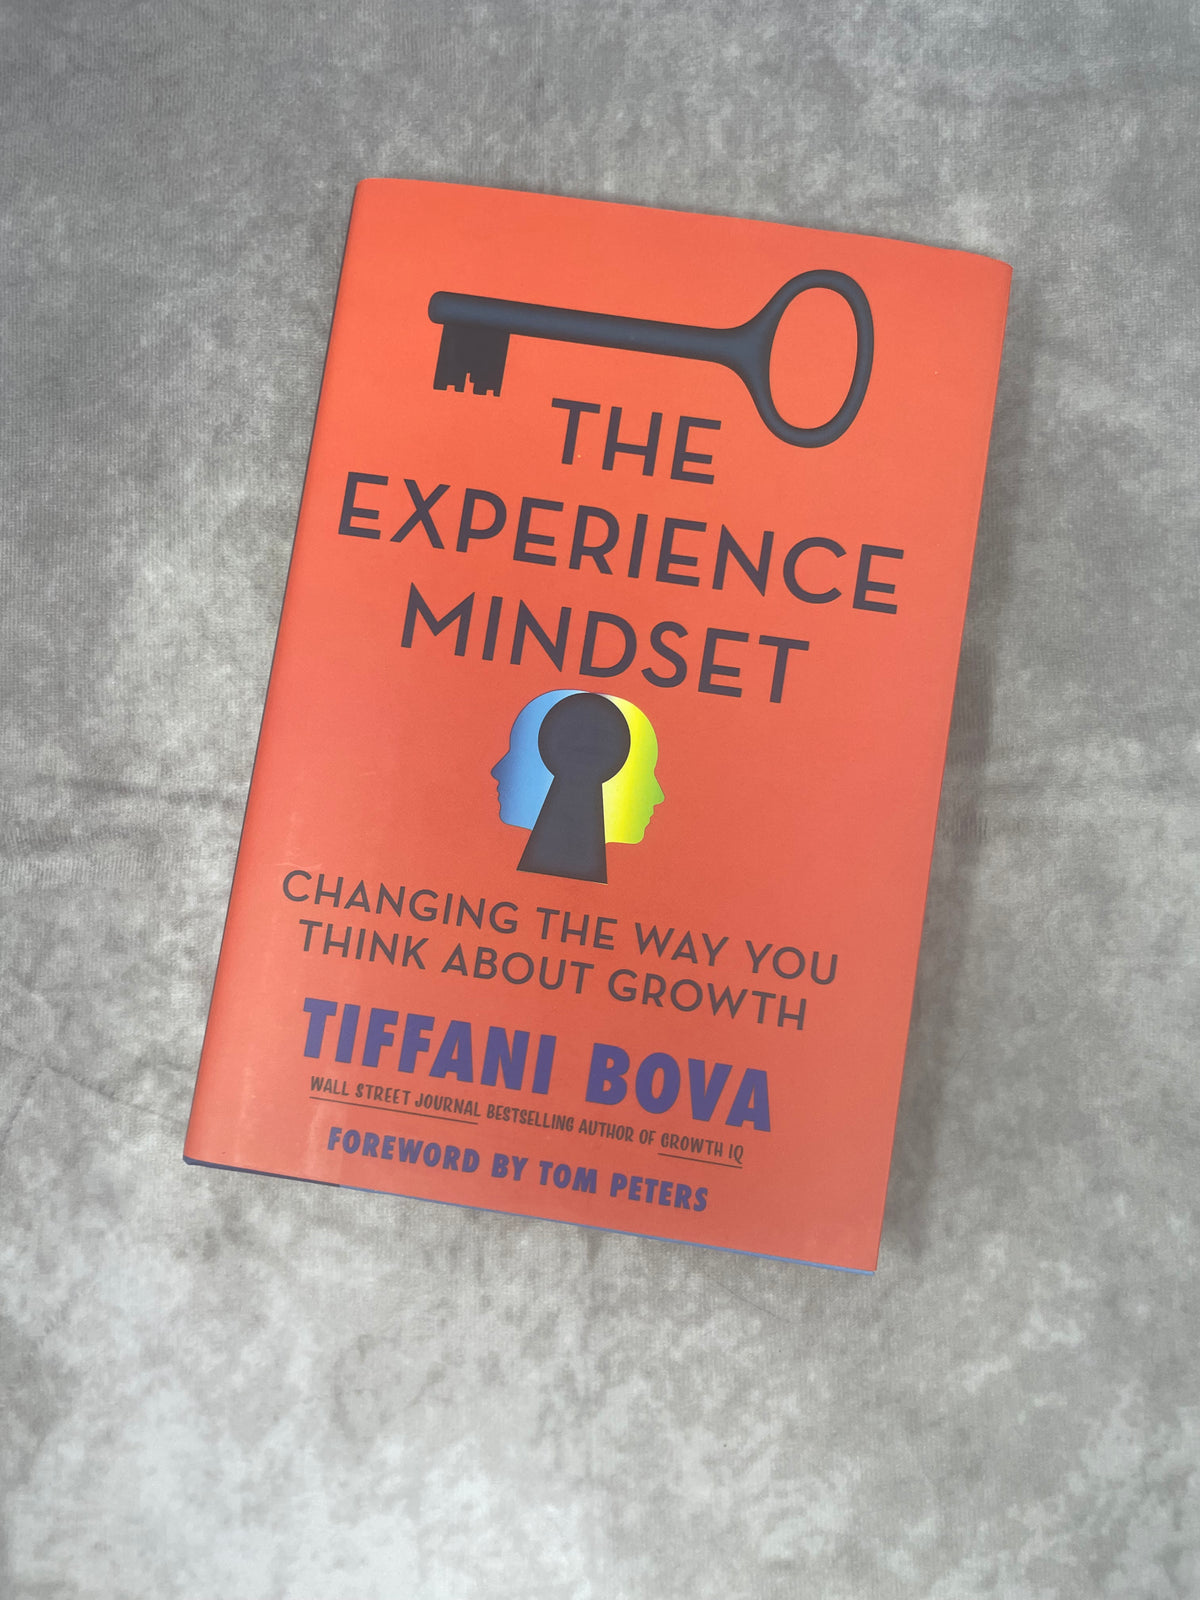 The Experience Mindset by Tiffani Bova